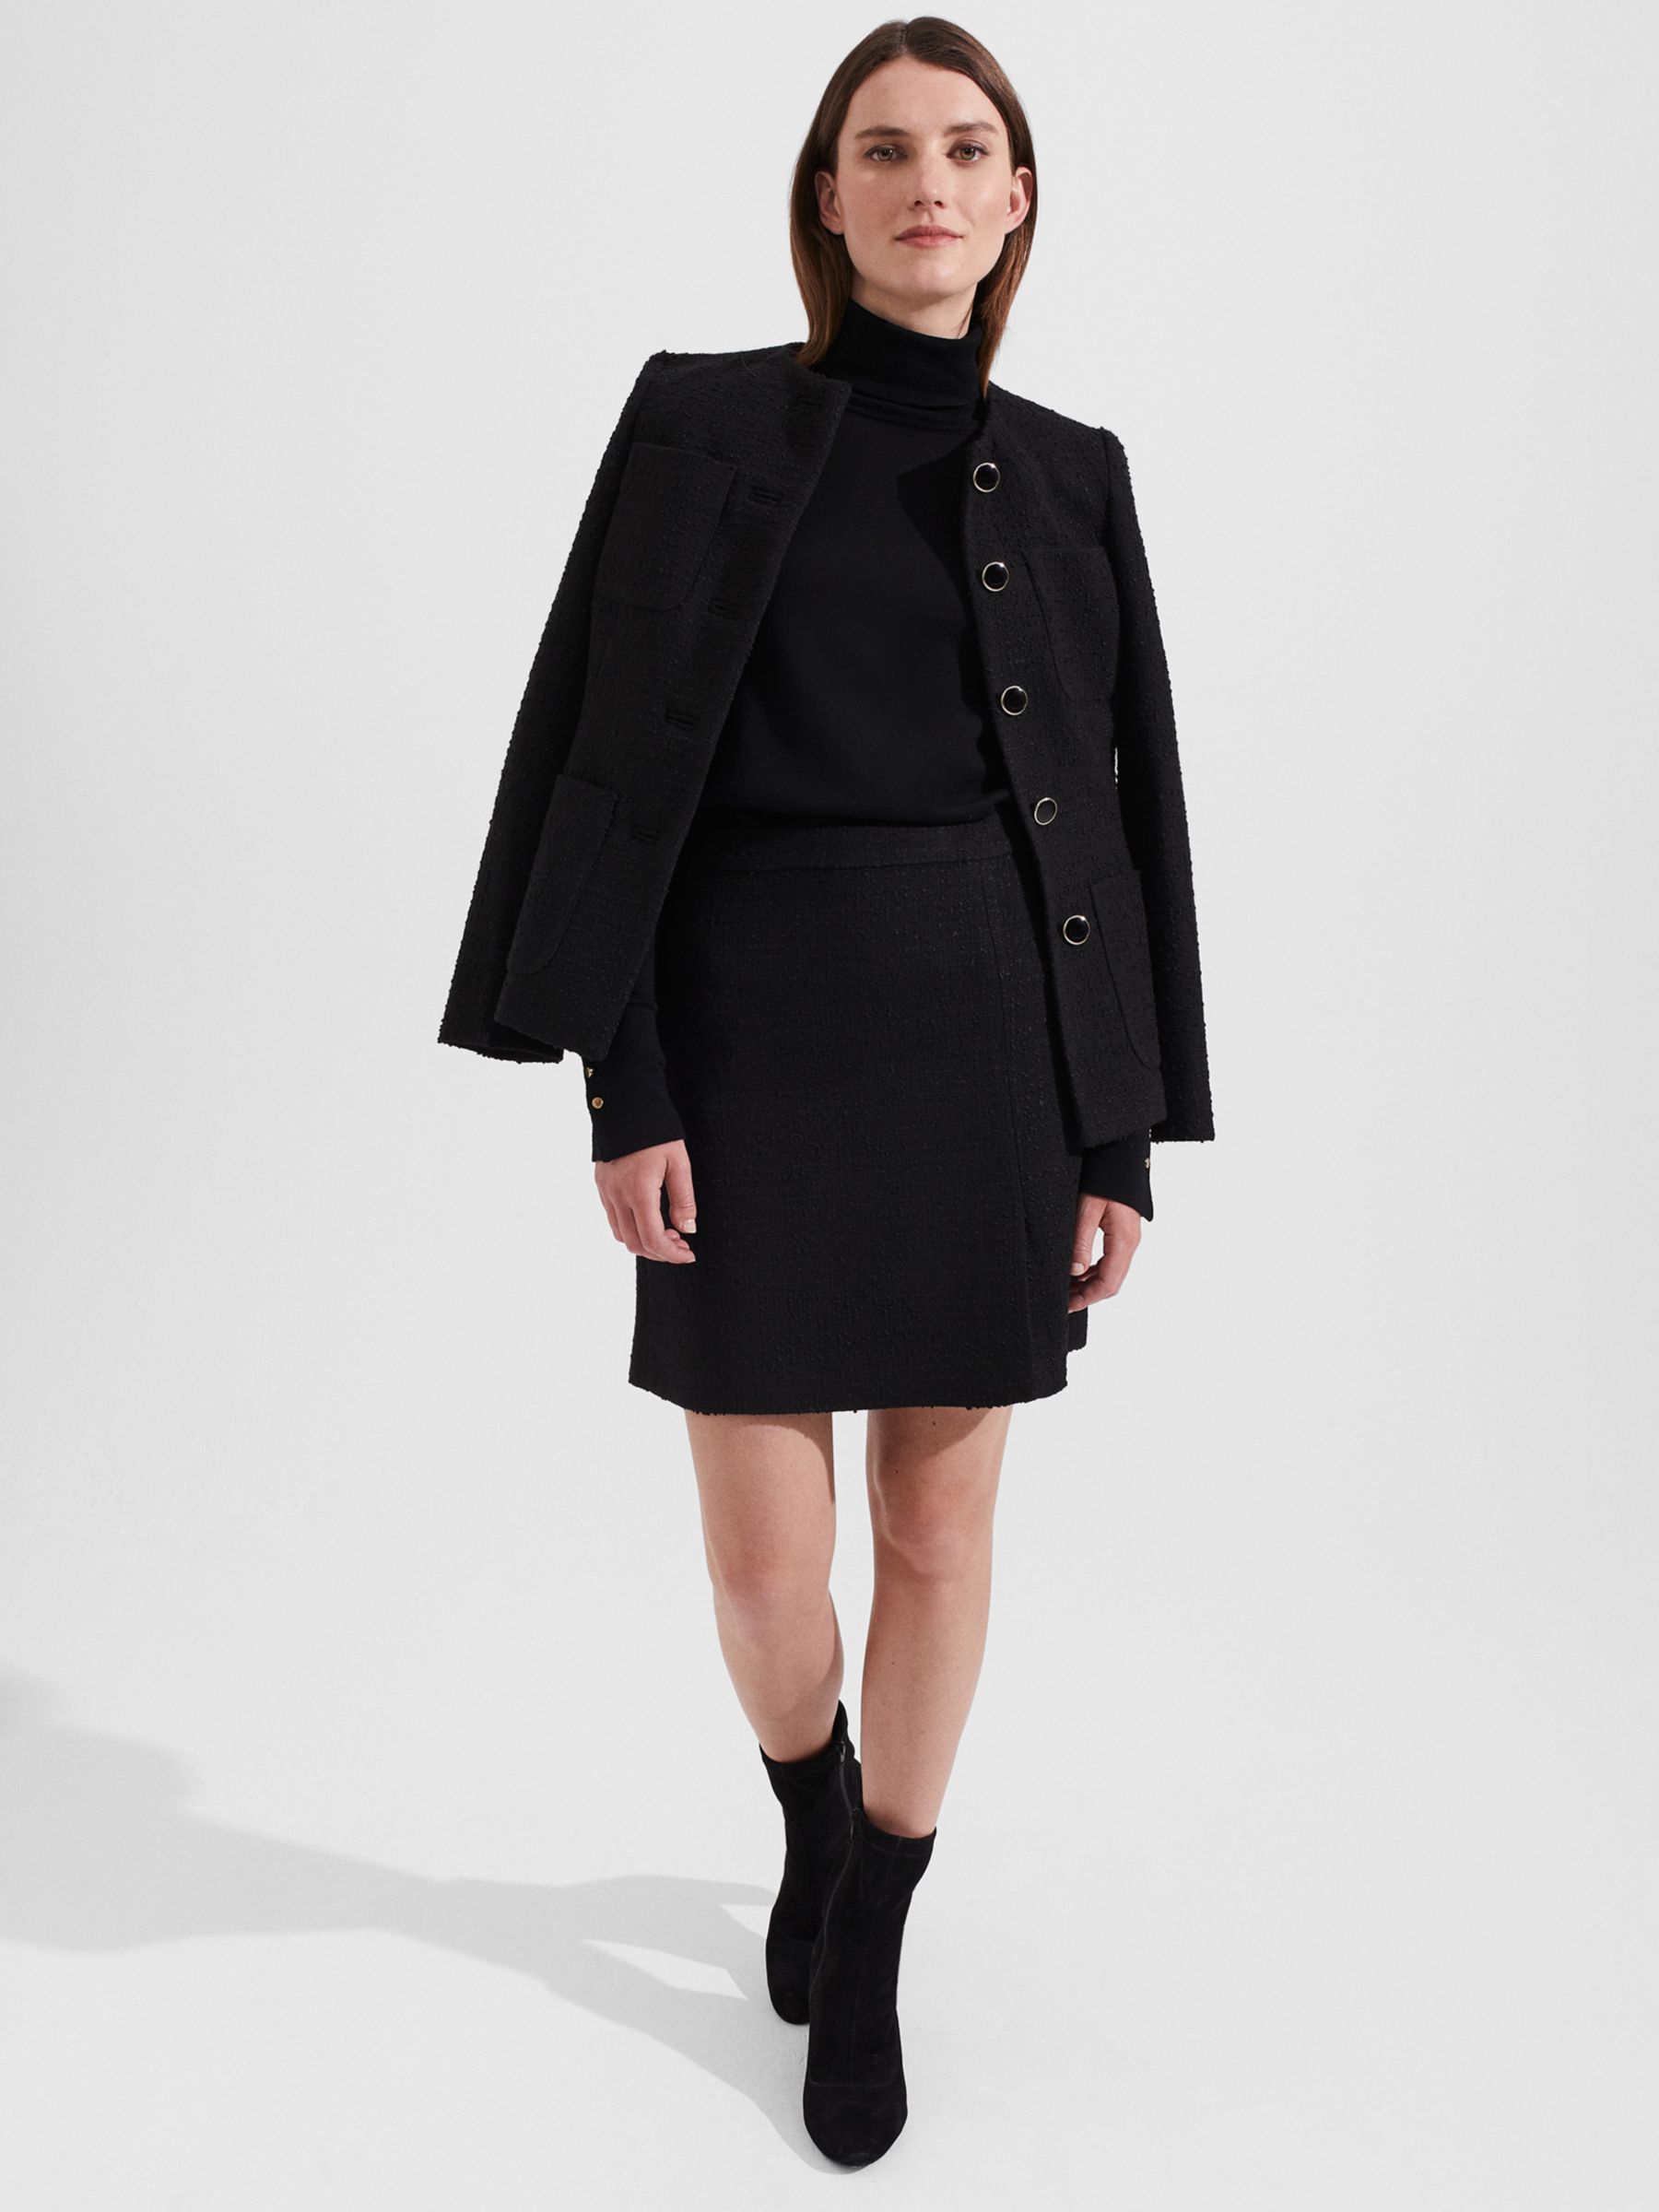 Hobbs Kelly Wool Blend Mini Skirt, Black at John Lewis & Partners